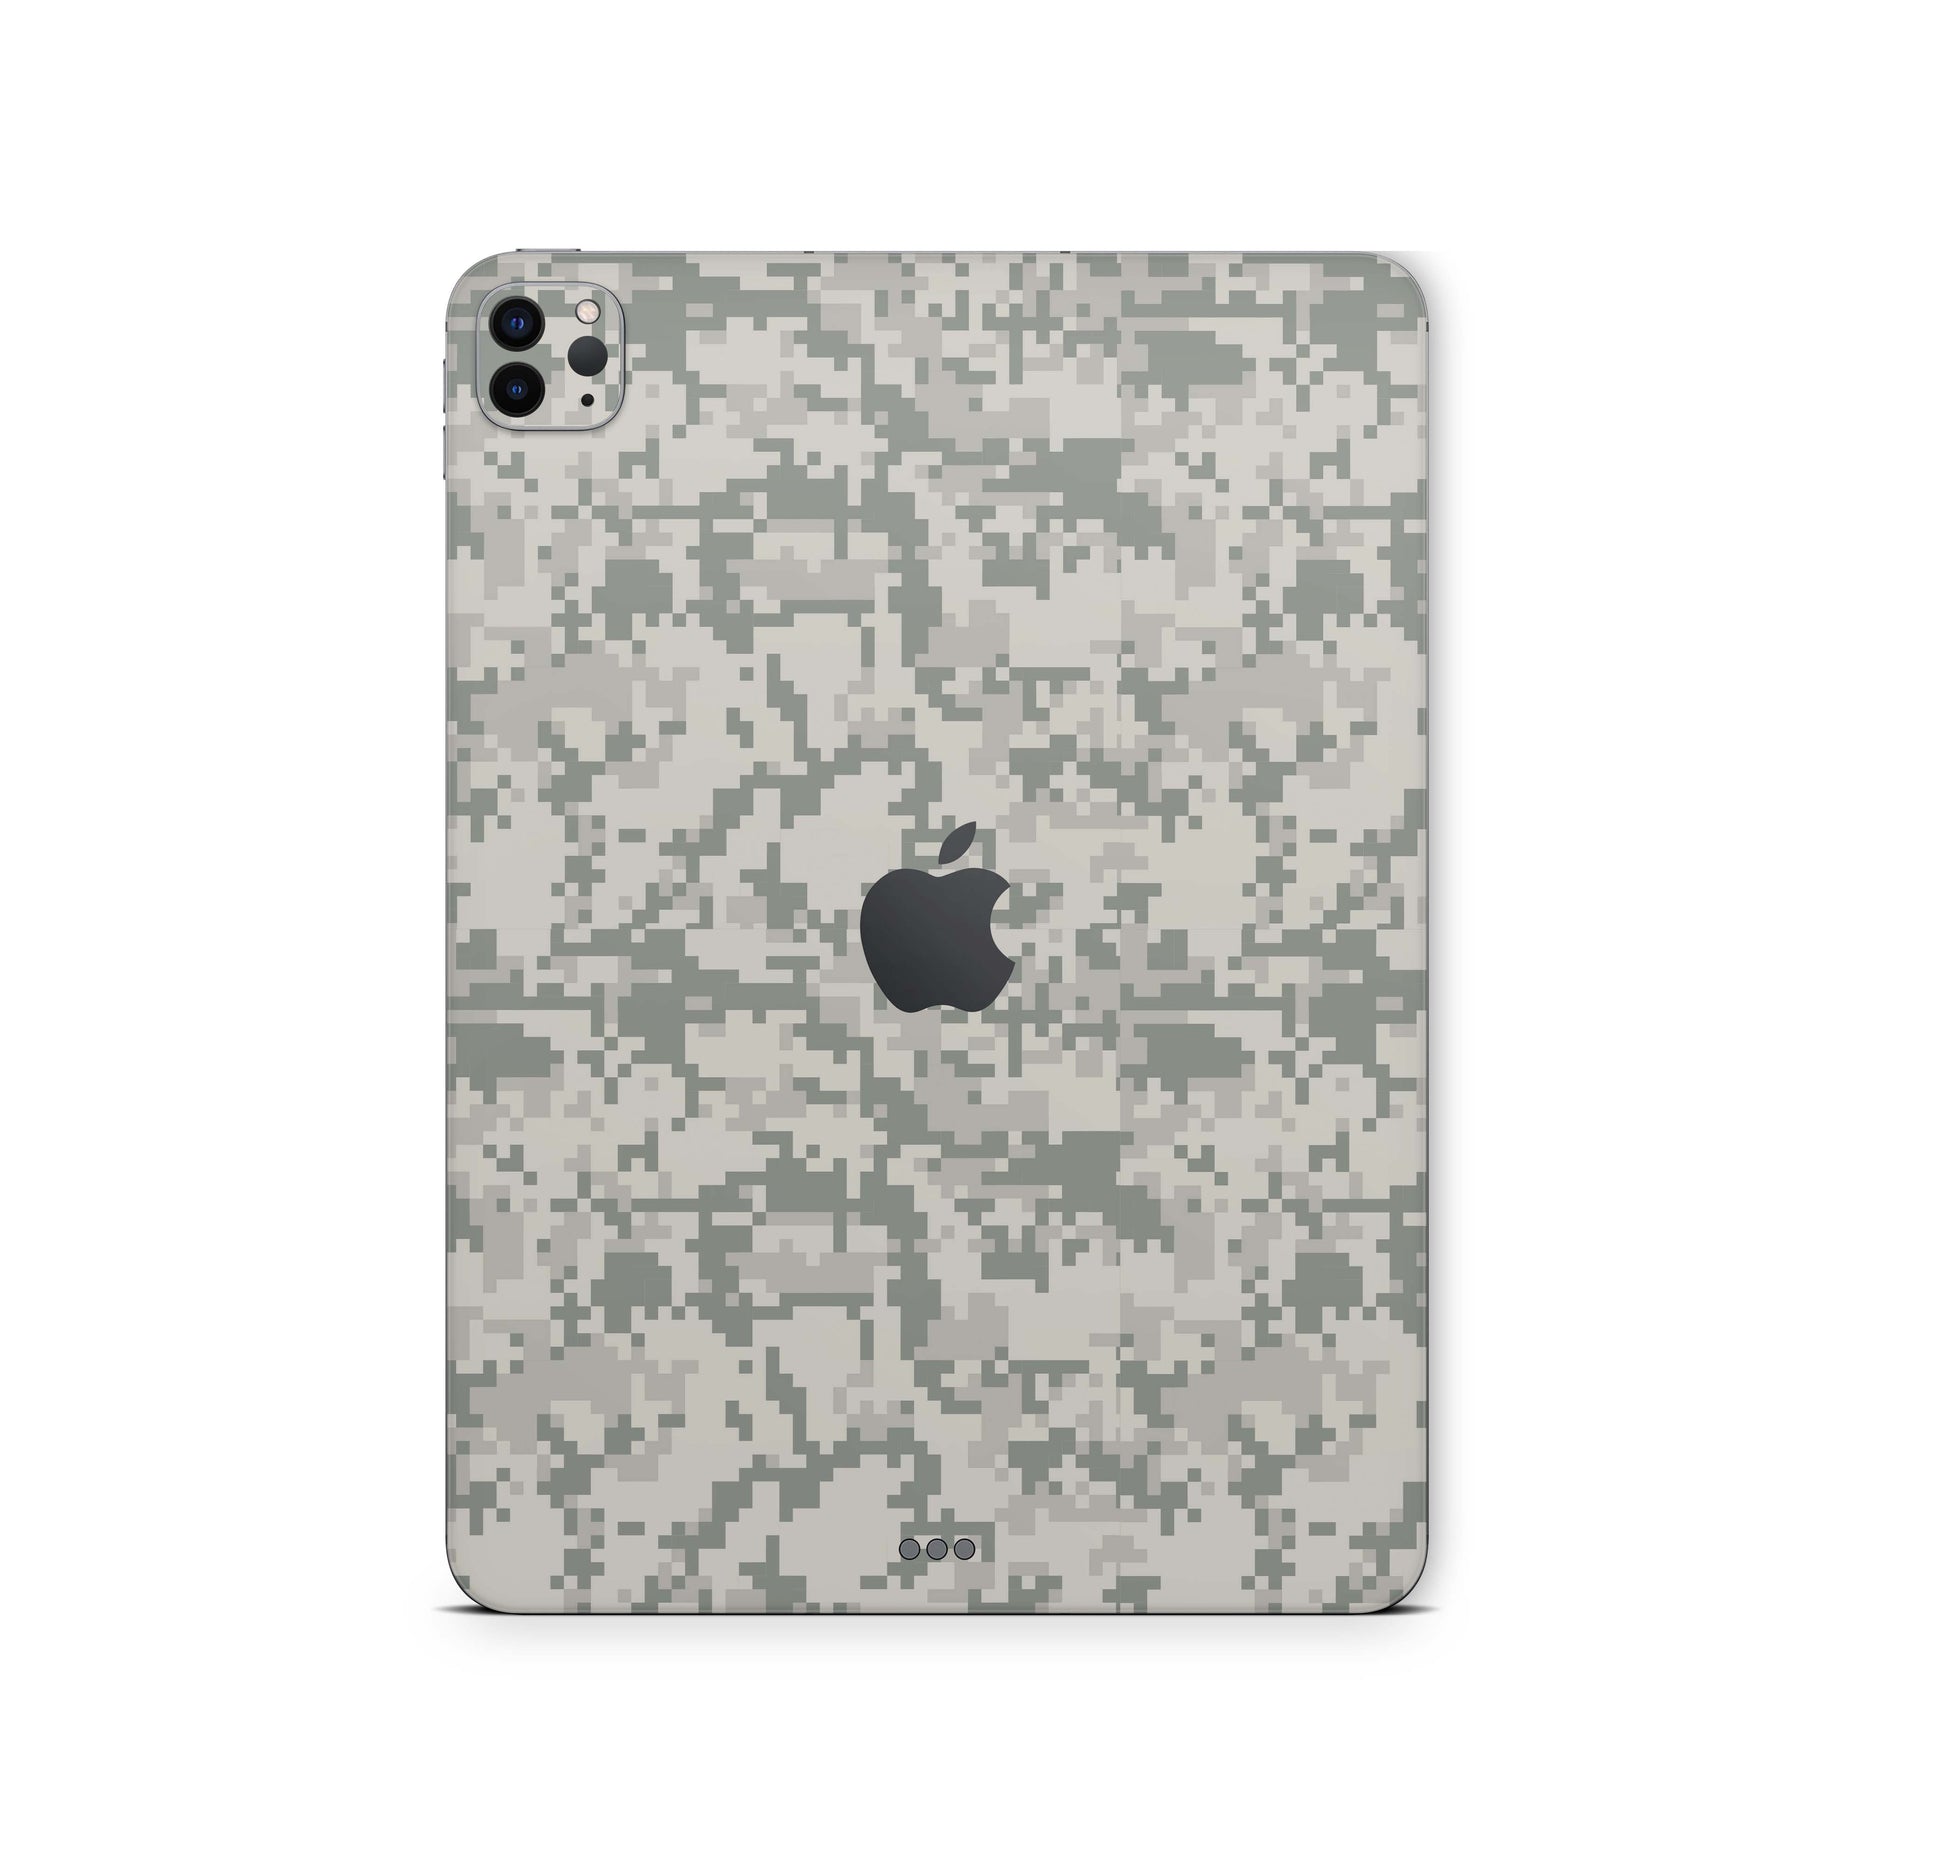 iPad Pro Skin 11" 3.Generation M1 2021 Design Cover Folie Vinyl Skins & Wraps Aufkleber Skins4u Acu-Camo  